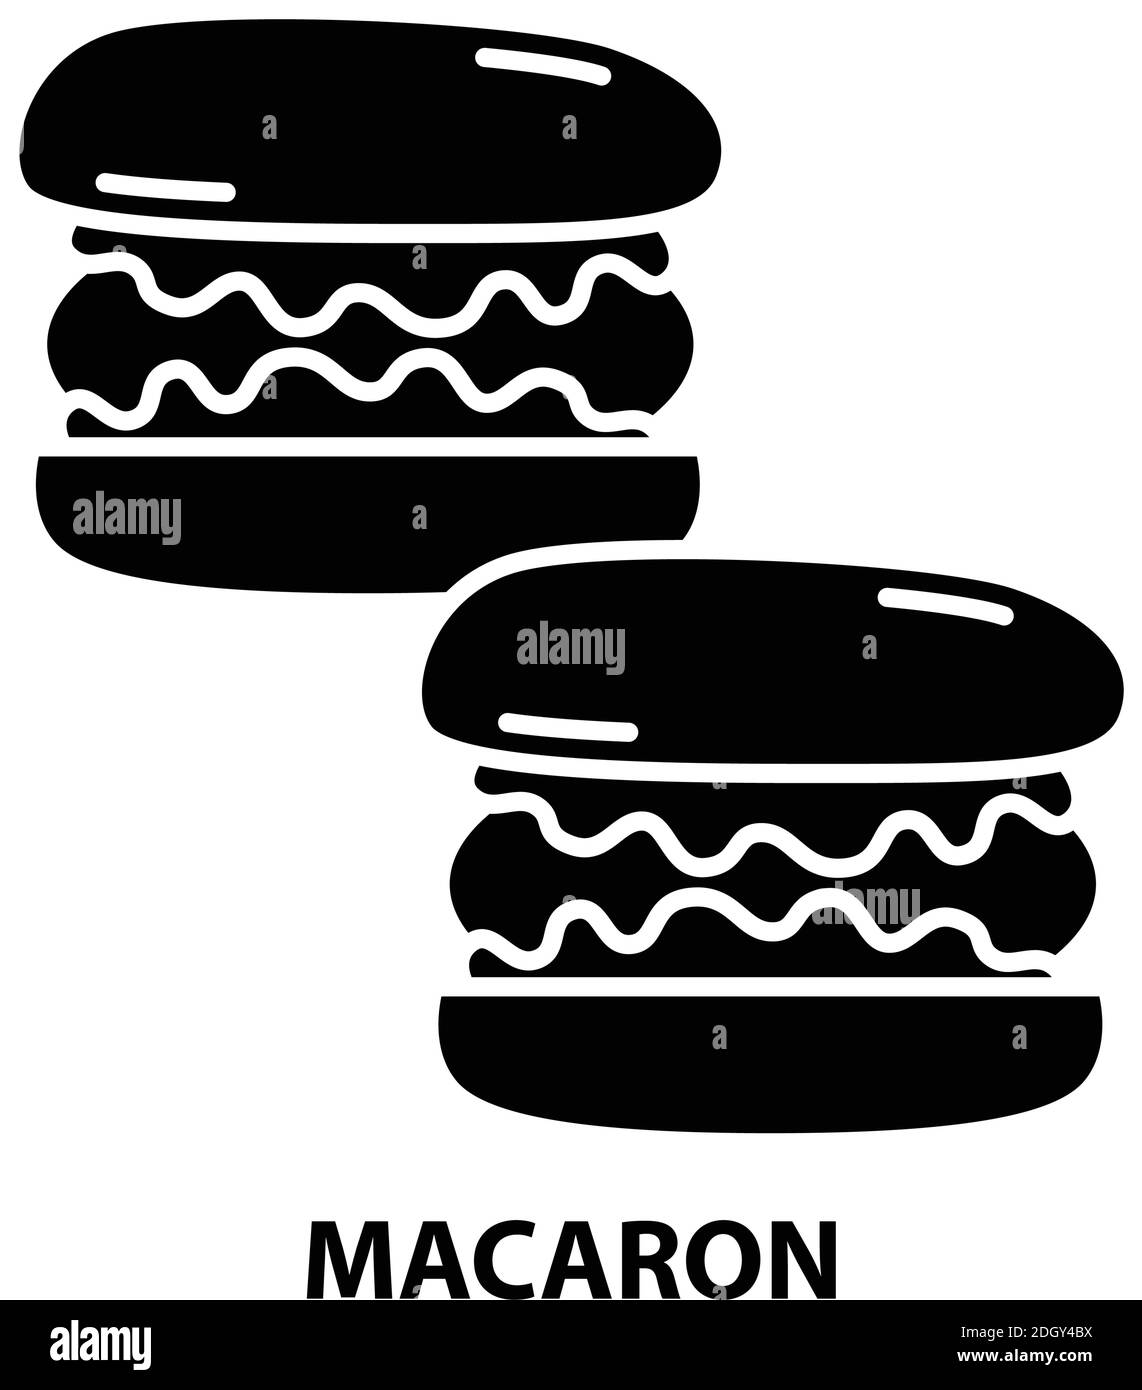 macaron icon, black vector sign with editable strokes, concept illustration Stock Vector